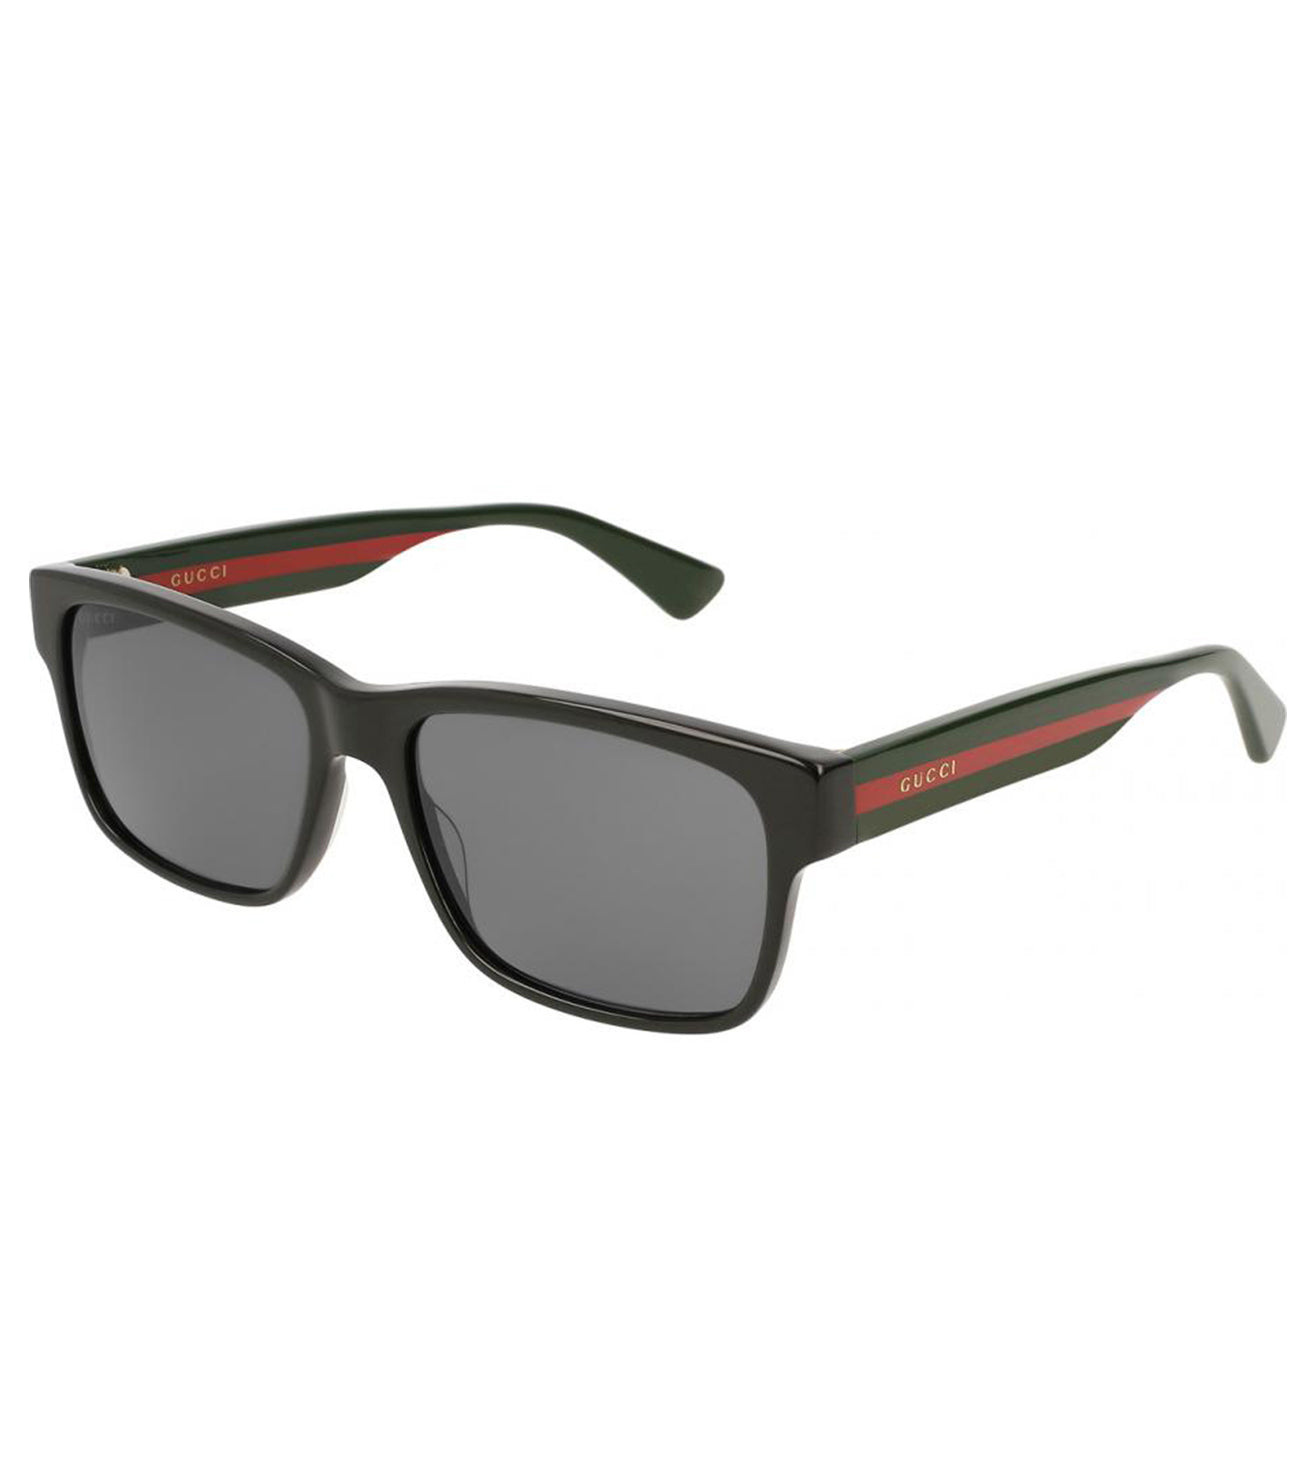 Gucci Men's Grey Rectangular Sunglasses